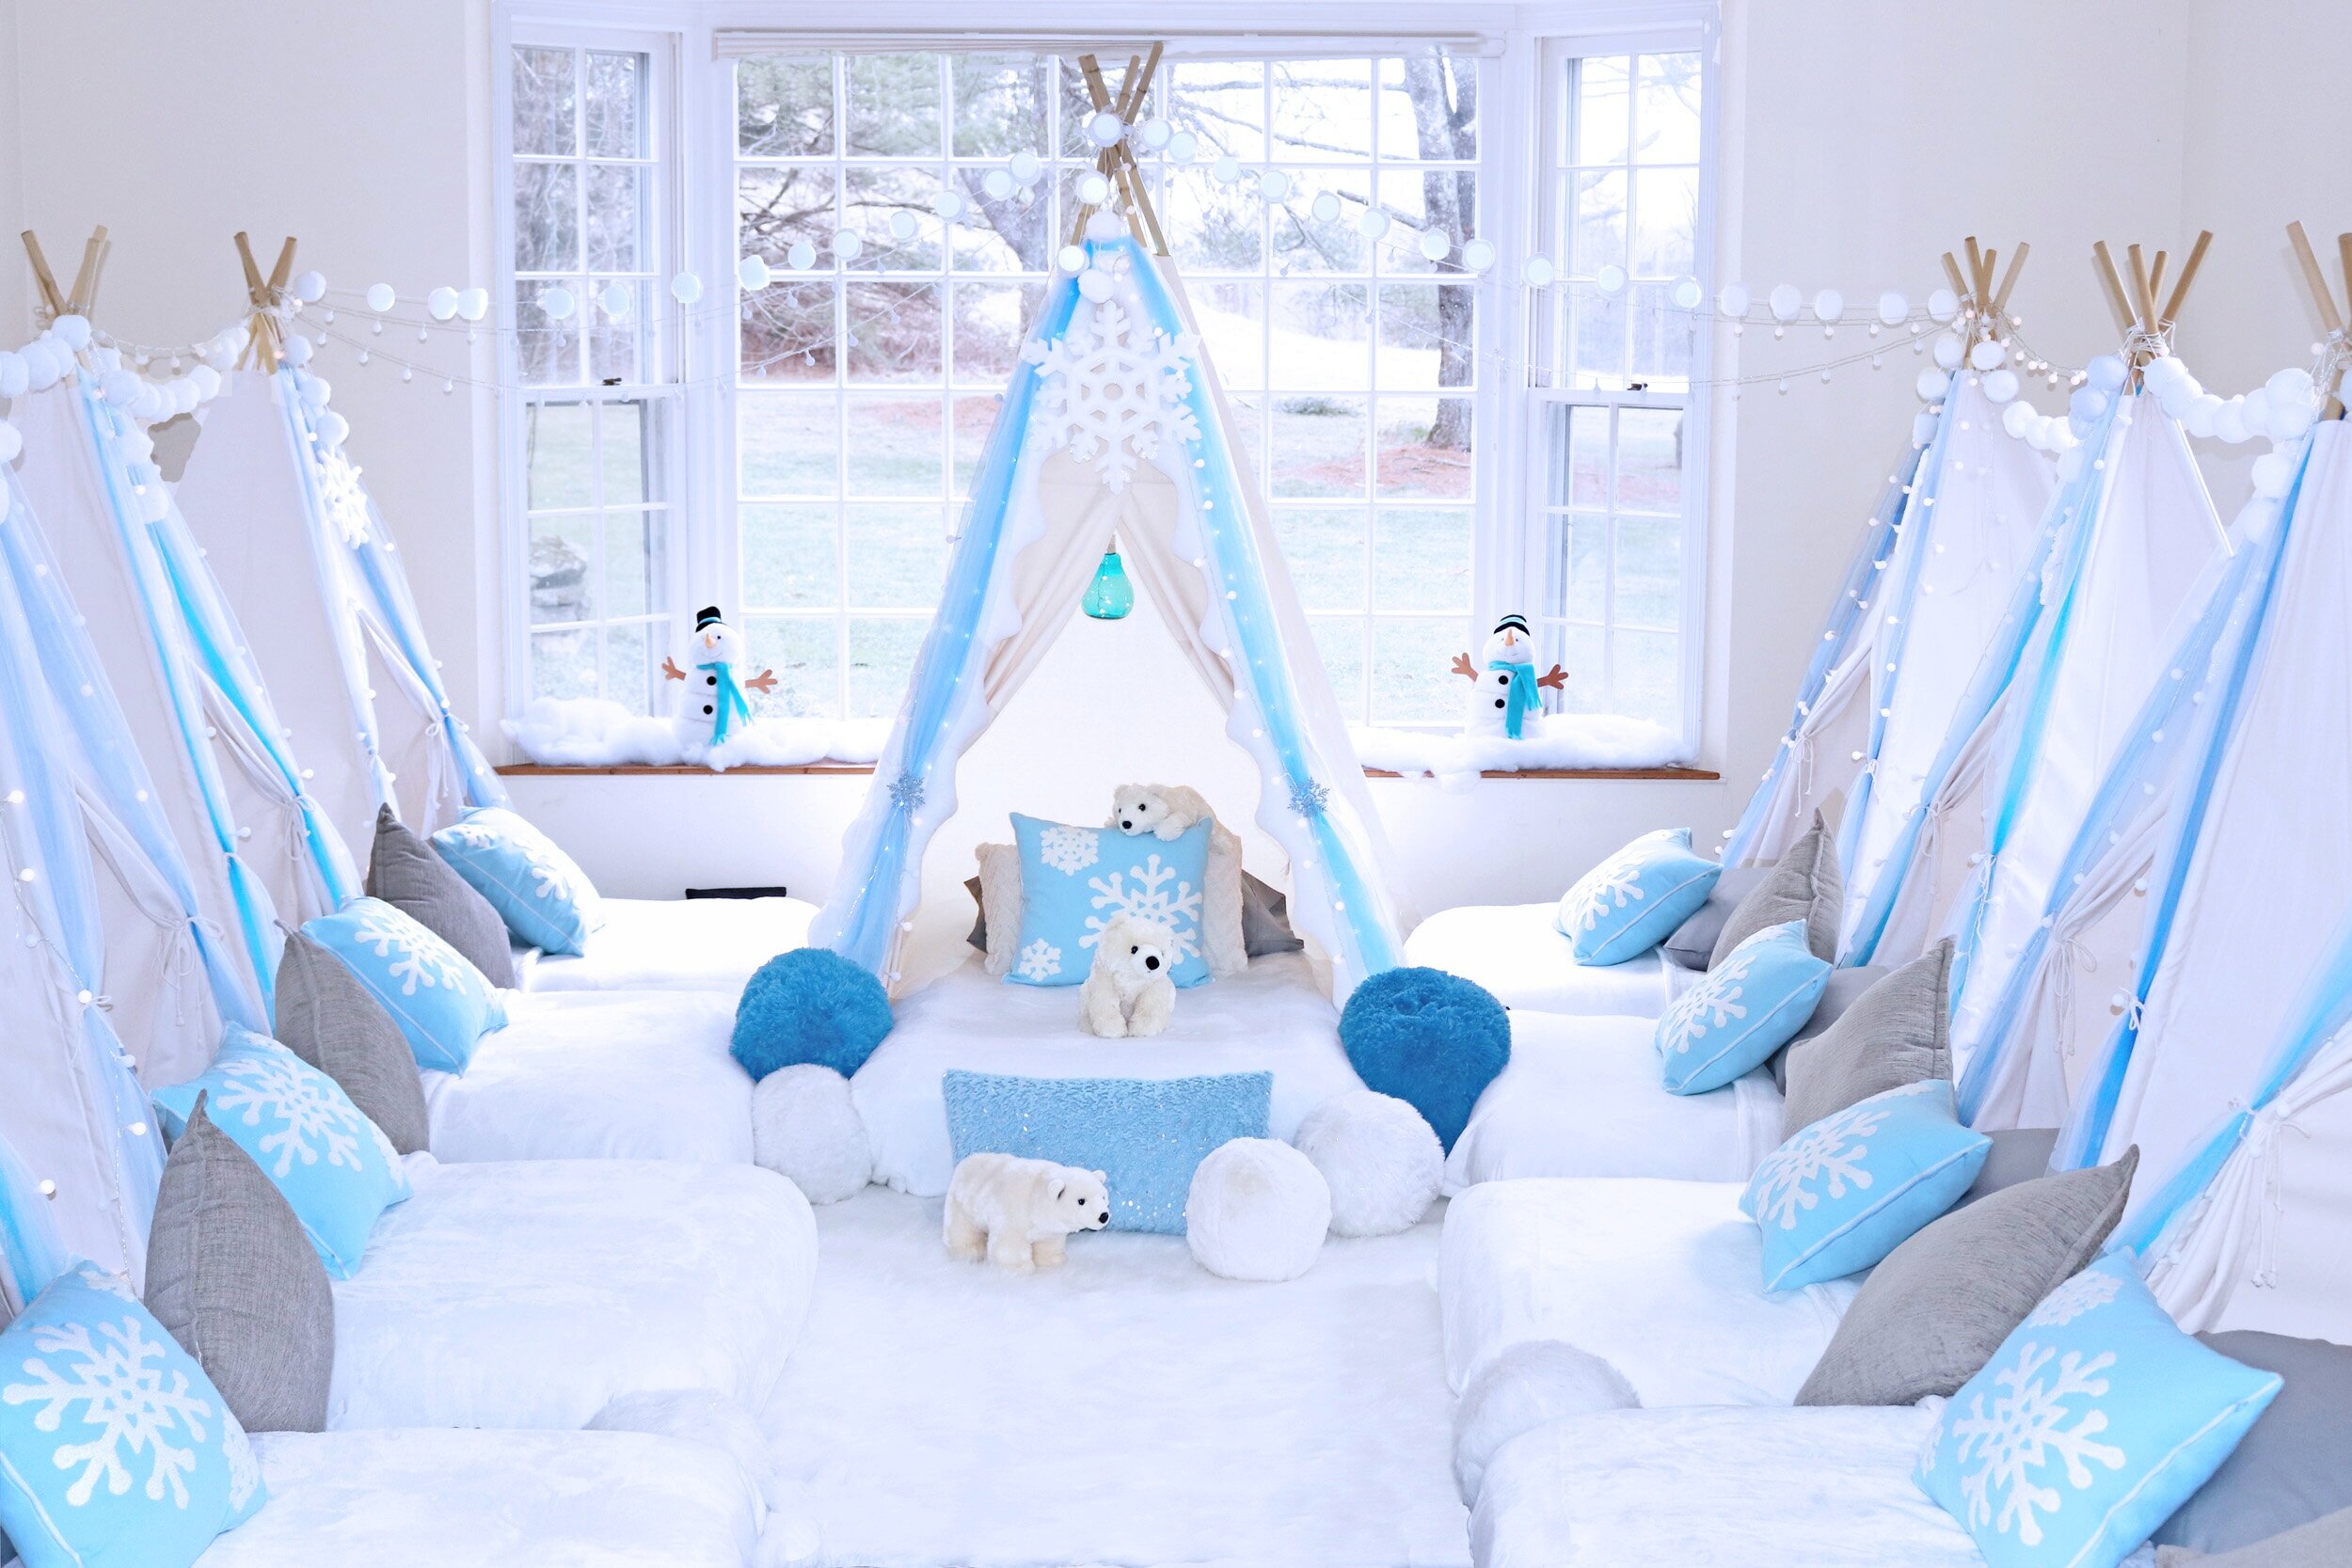 Winter Wonderland Party Ideas for Kids